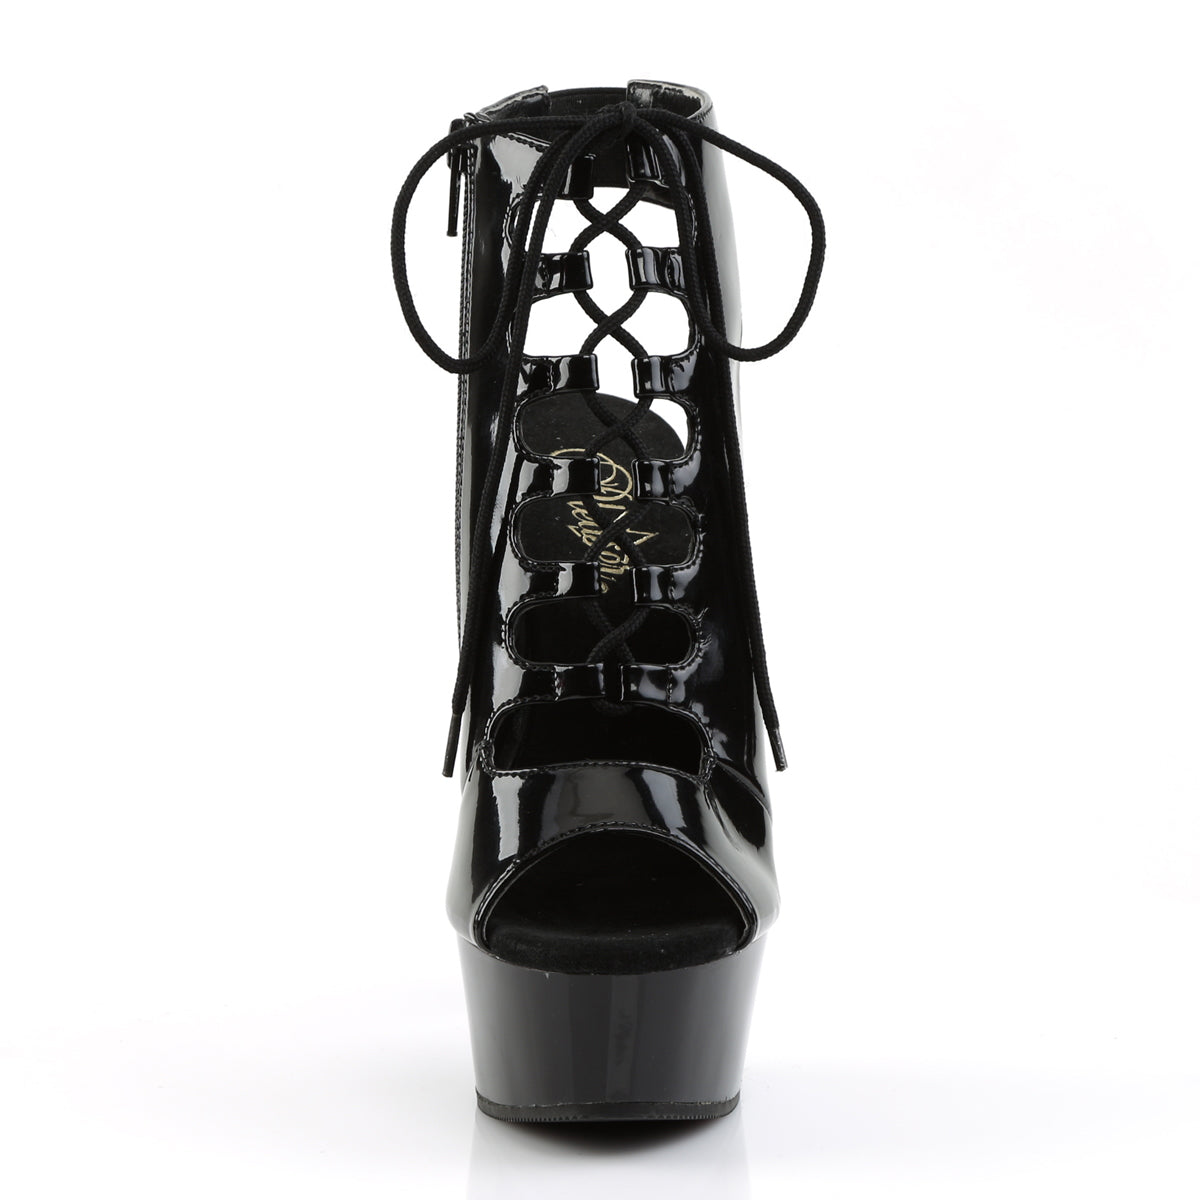 DELIGHT-600-20 Black Ankle Peep Toe Boots